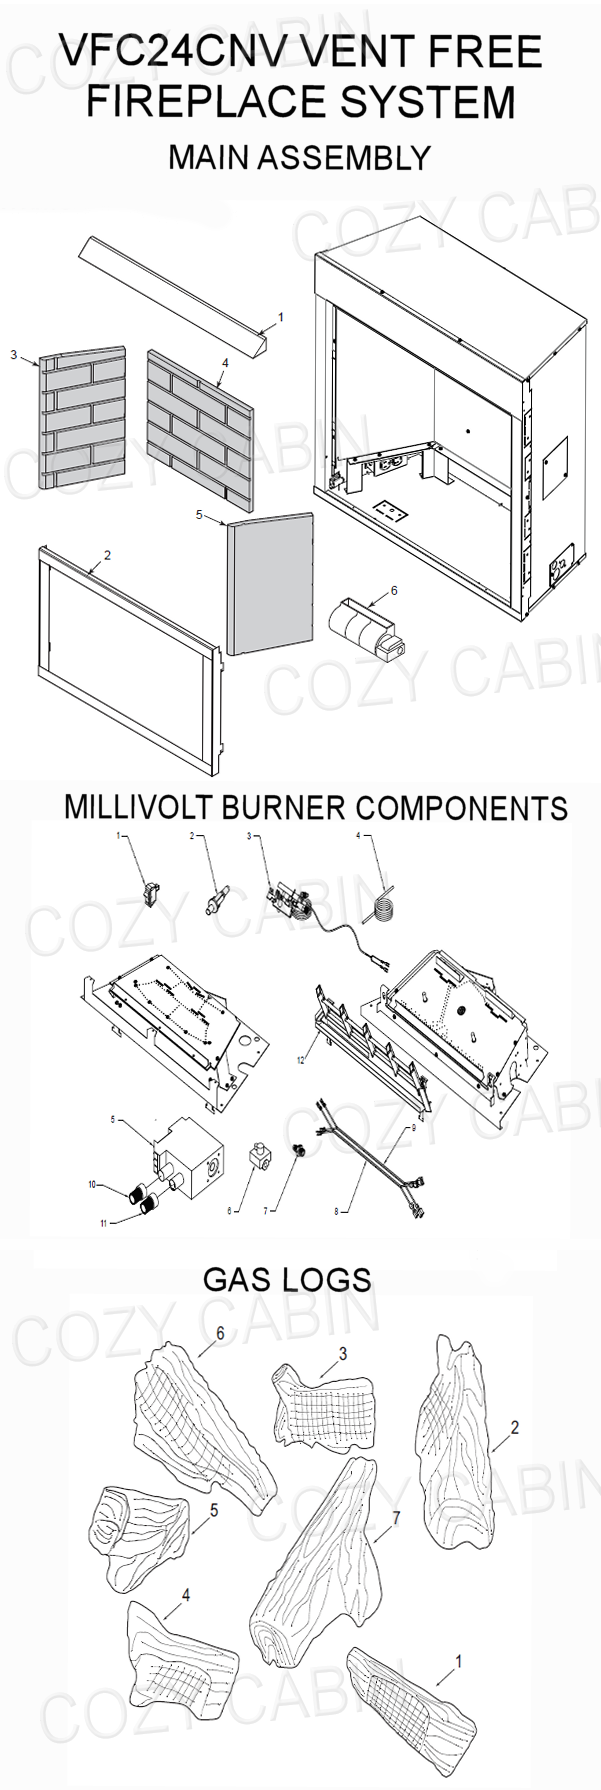 Monessen Vent Free Natural Gas Fireplace System with Millivolt Burner (VFC24CNV) #VFC24CNV